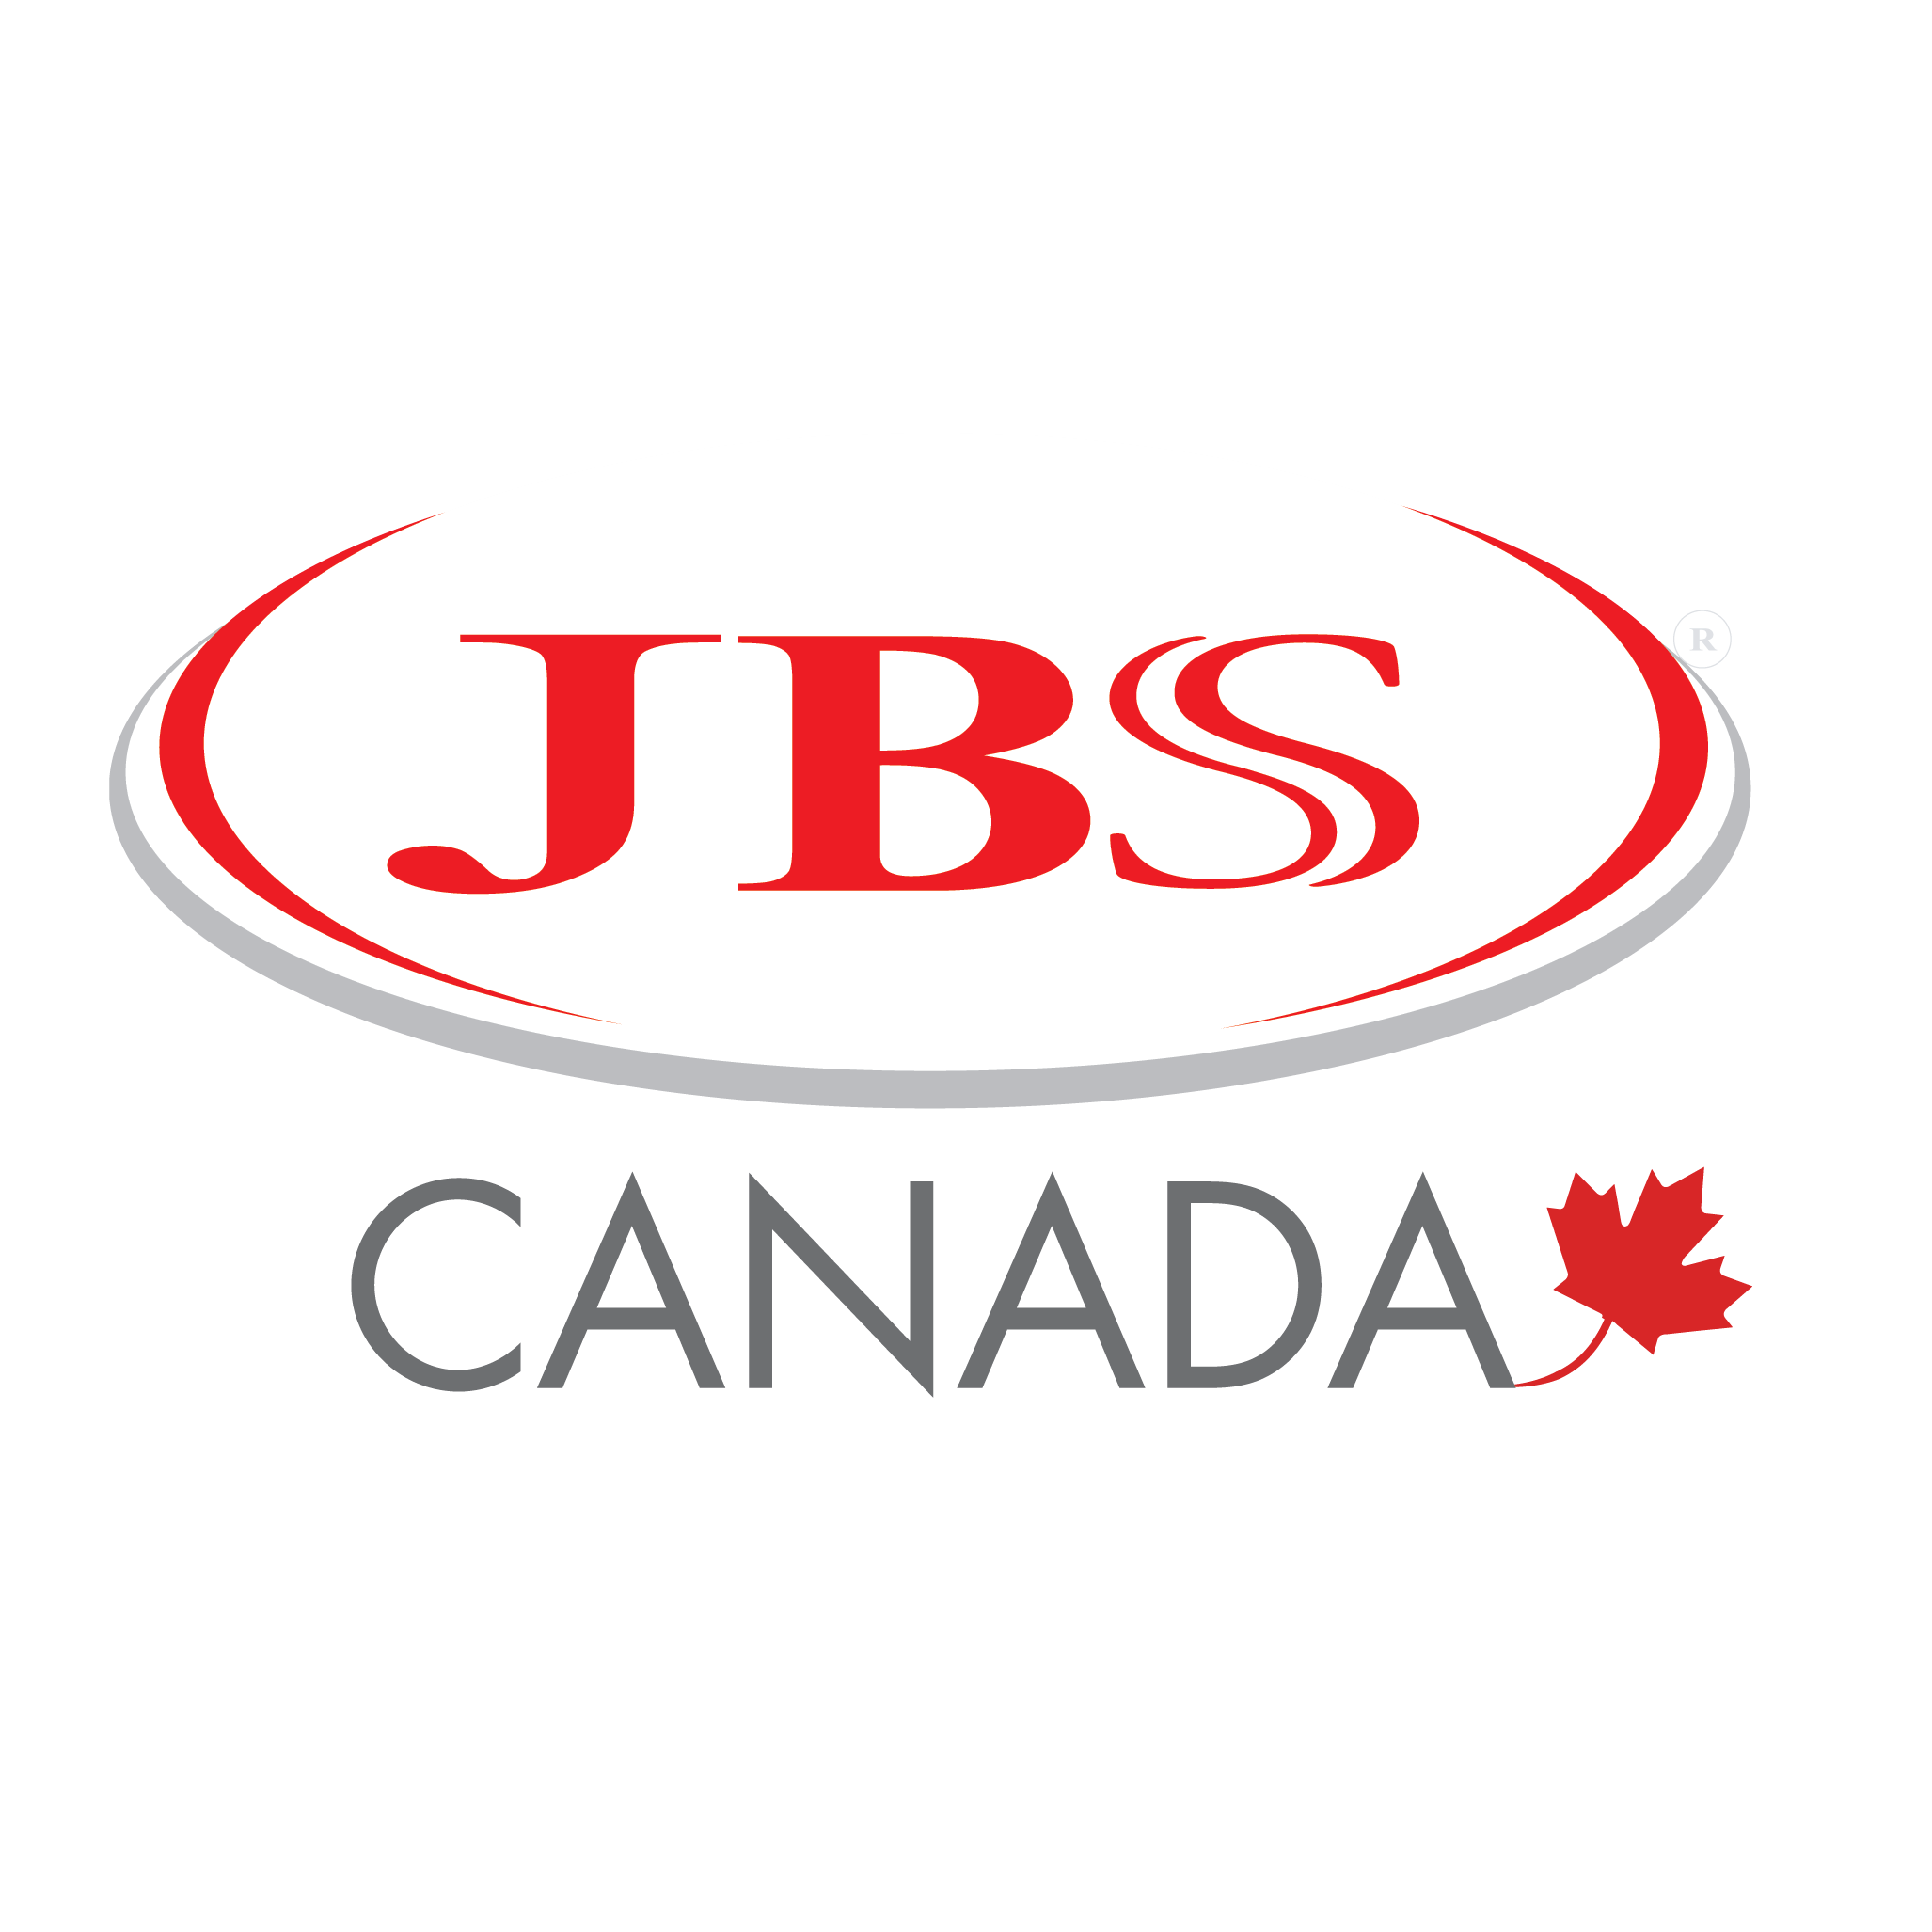 JBS Canada